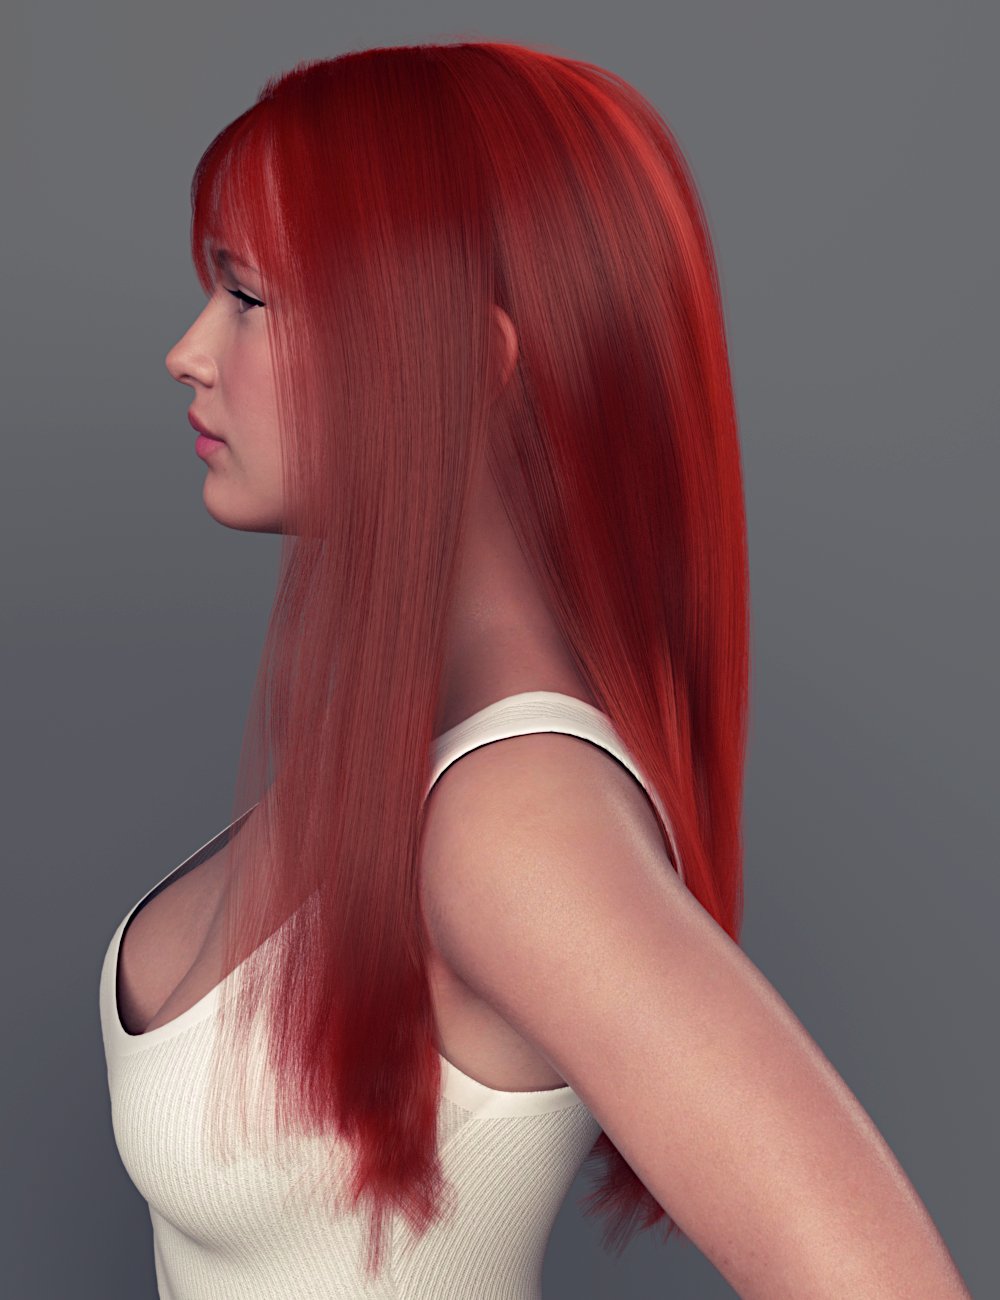 dForce Regina Hair for Genesis 8 Female(s) by: Toyen, 3D Models by Daz 3D